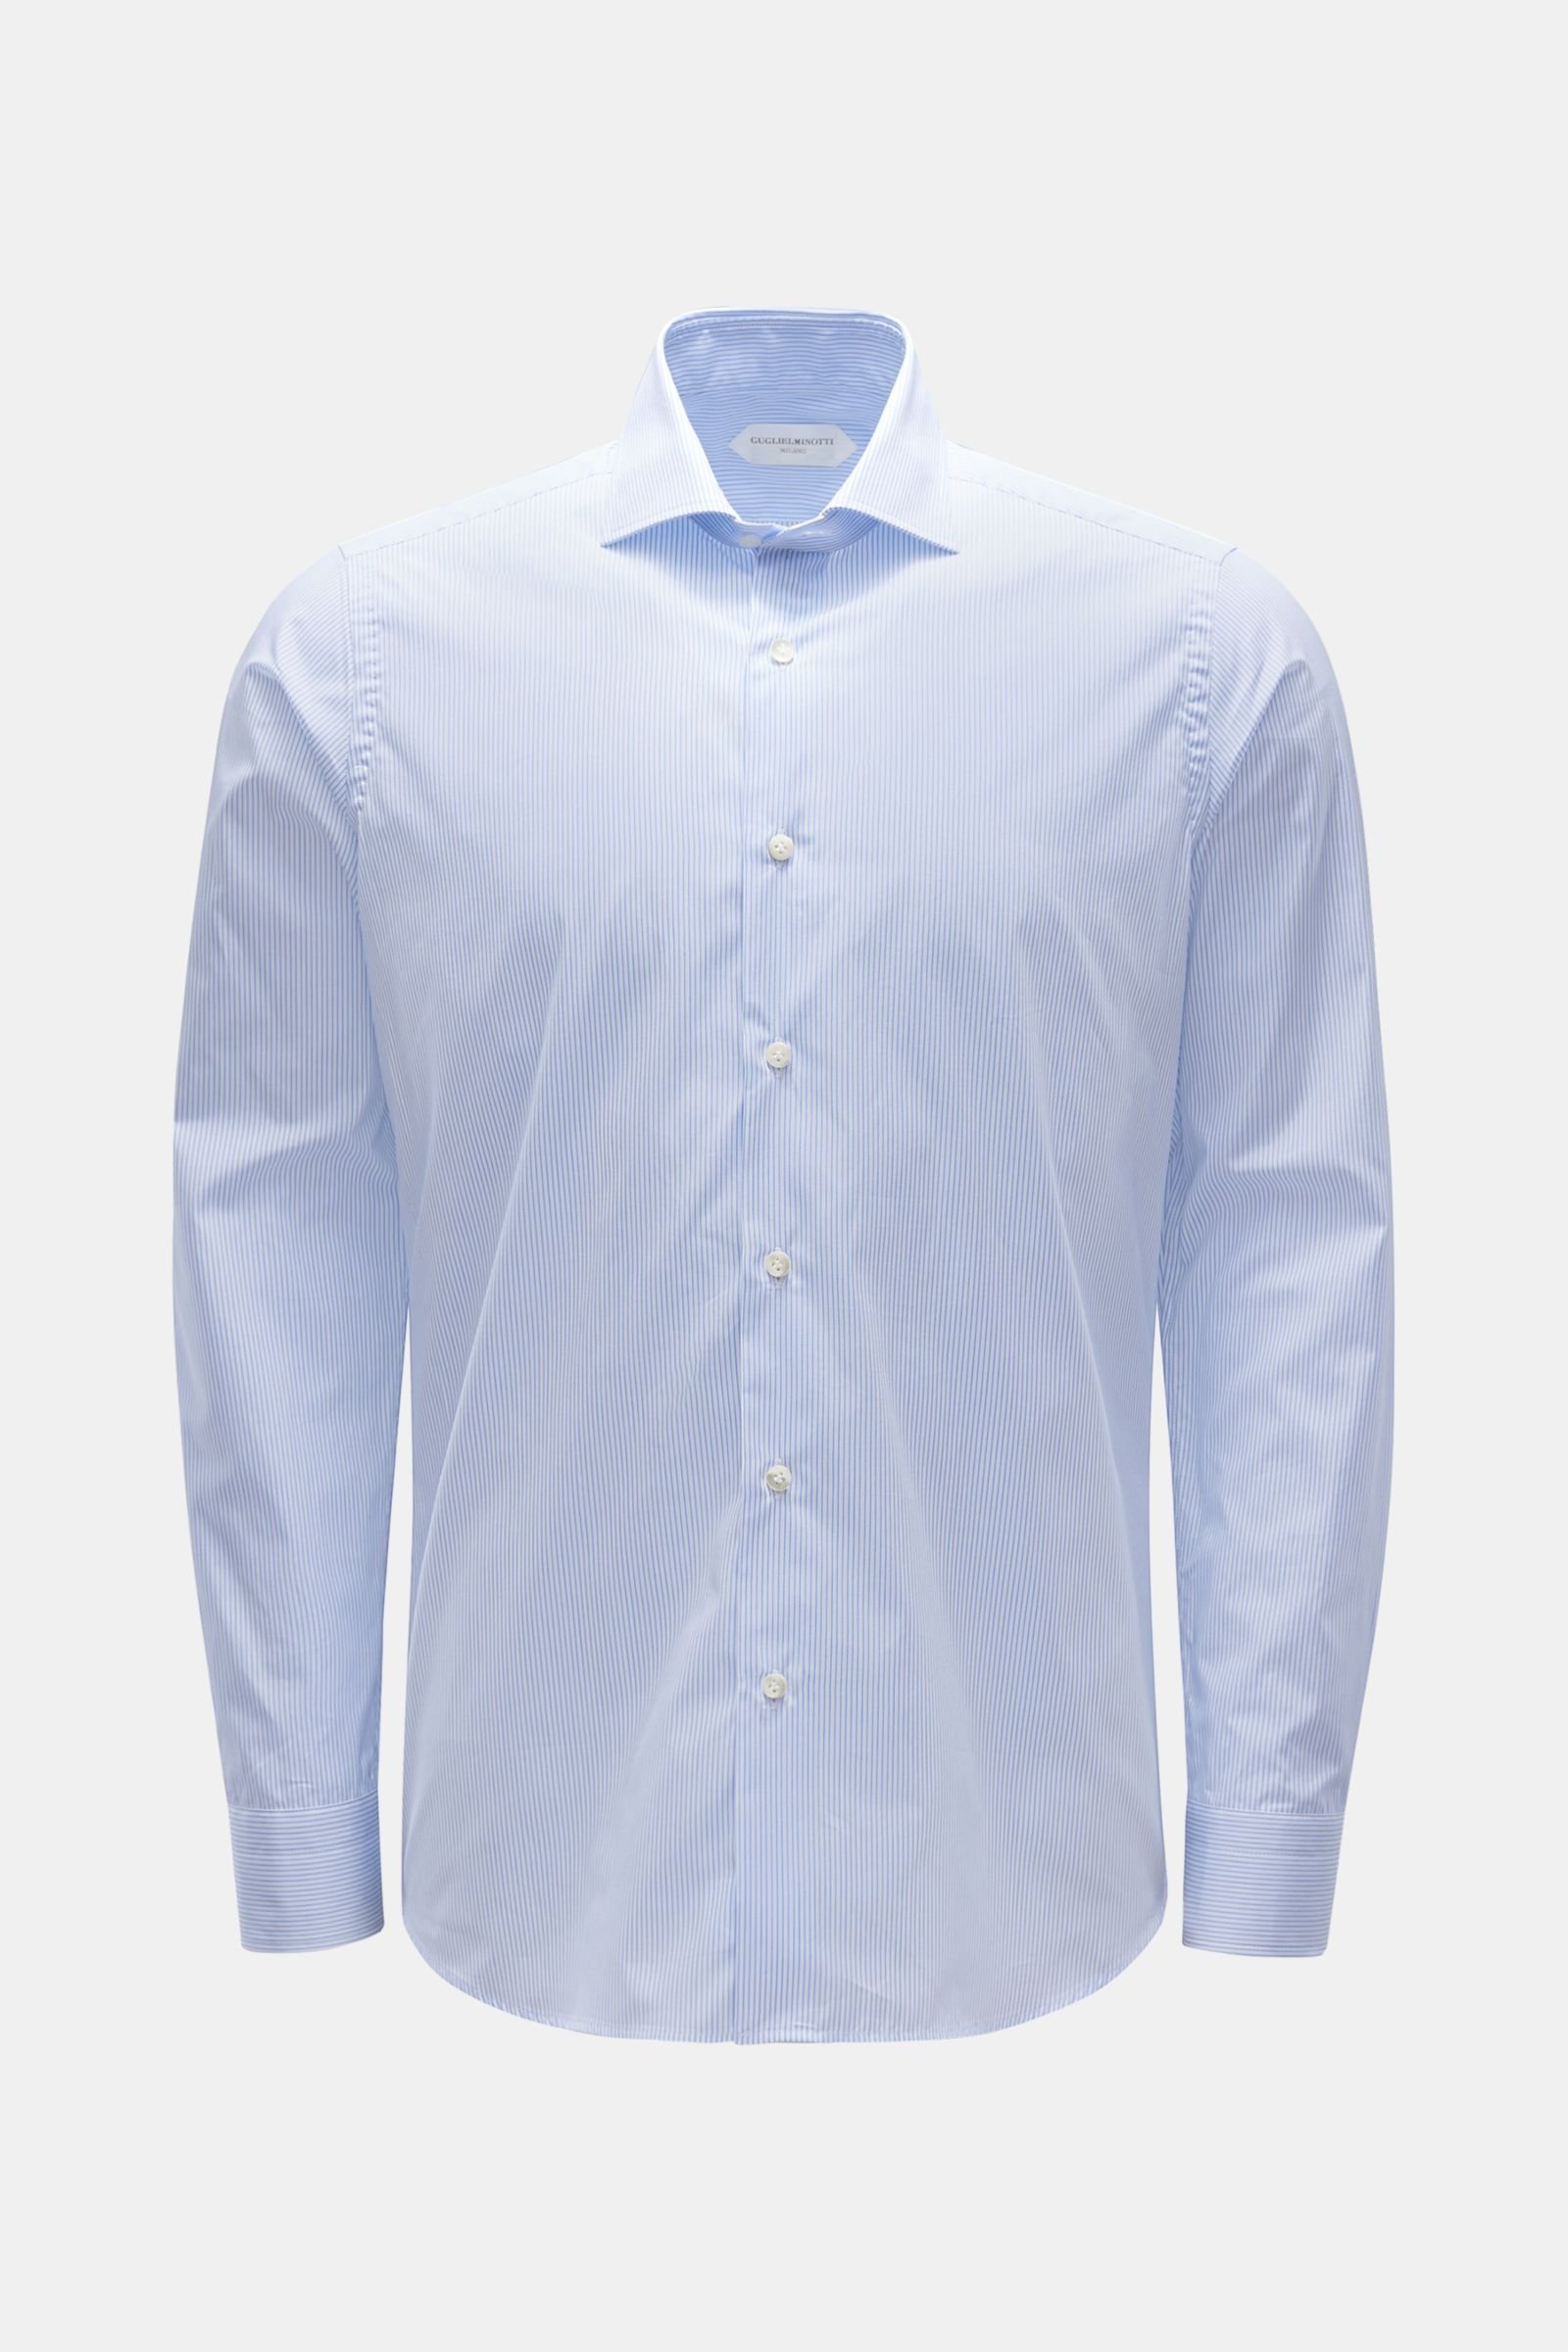 Casual shirt shark collar light blue/white striped